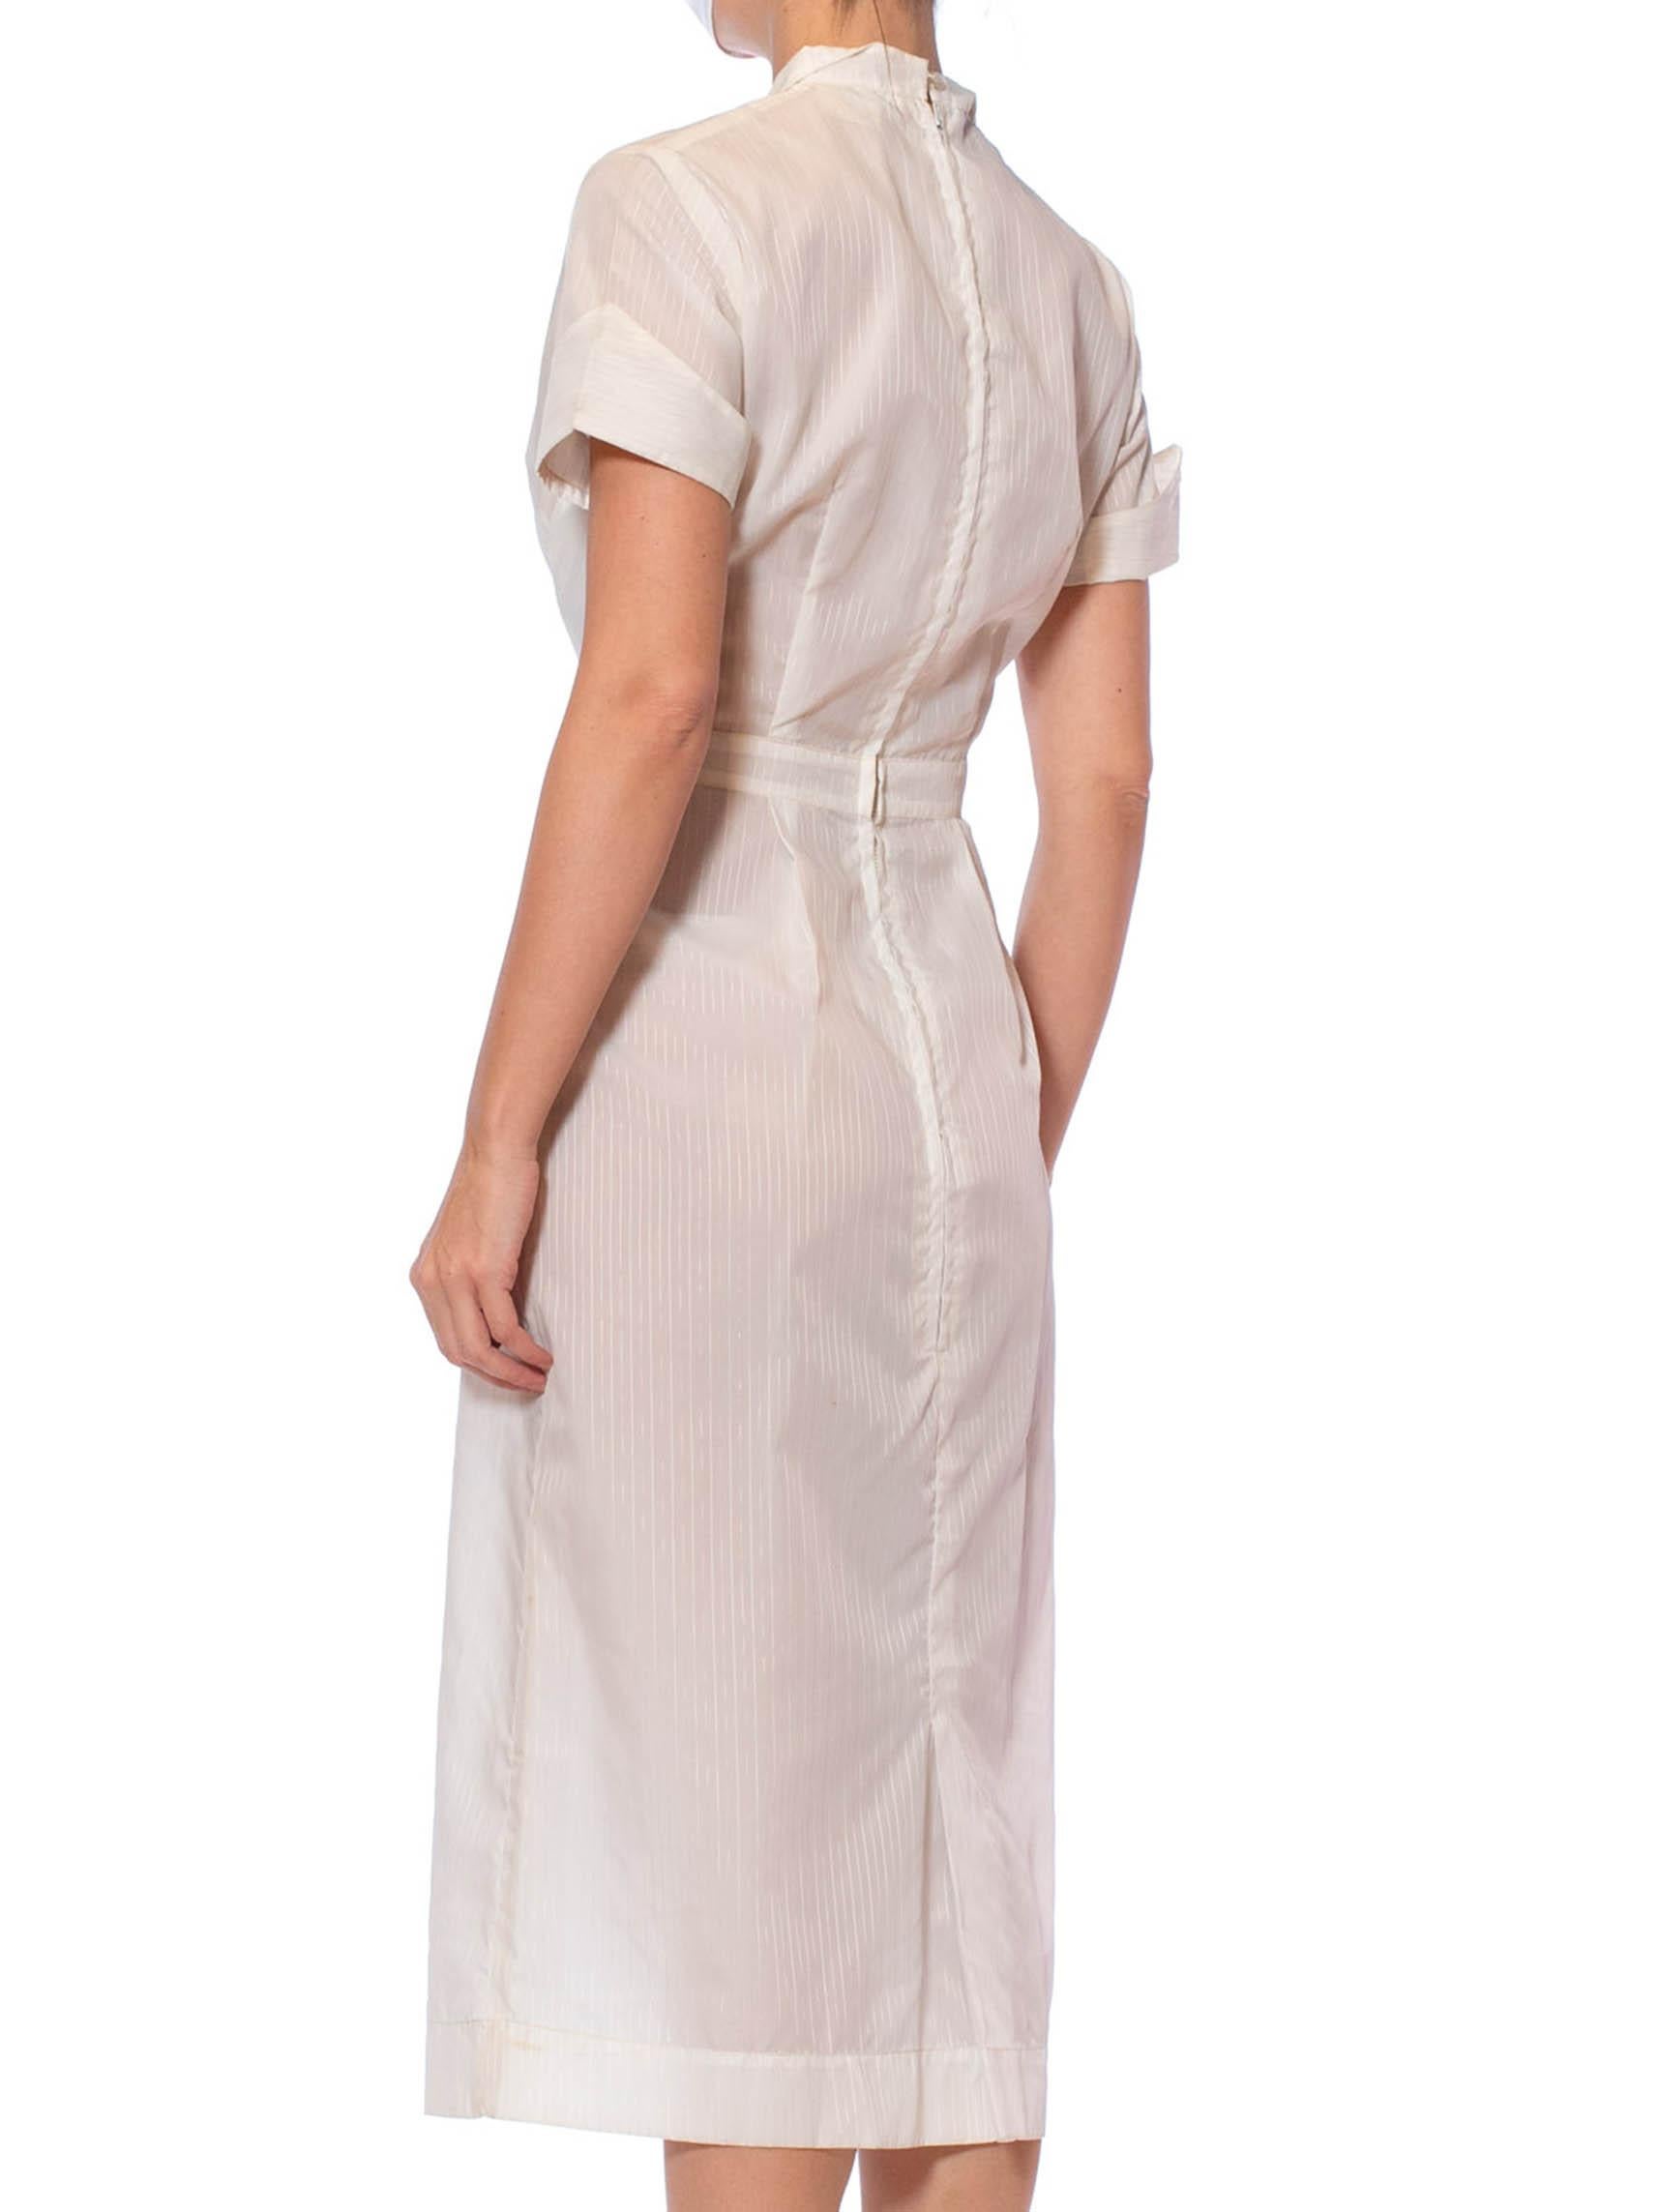 Women's 1950S White Nylon Pin-Up Nurse Uniform Dress For Sale